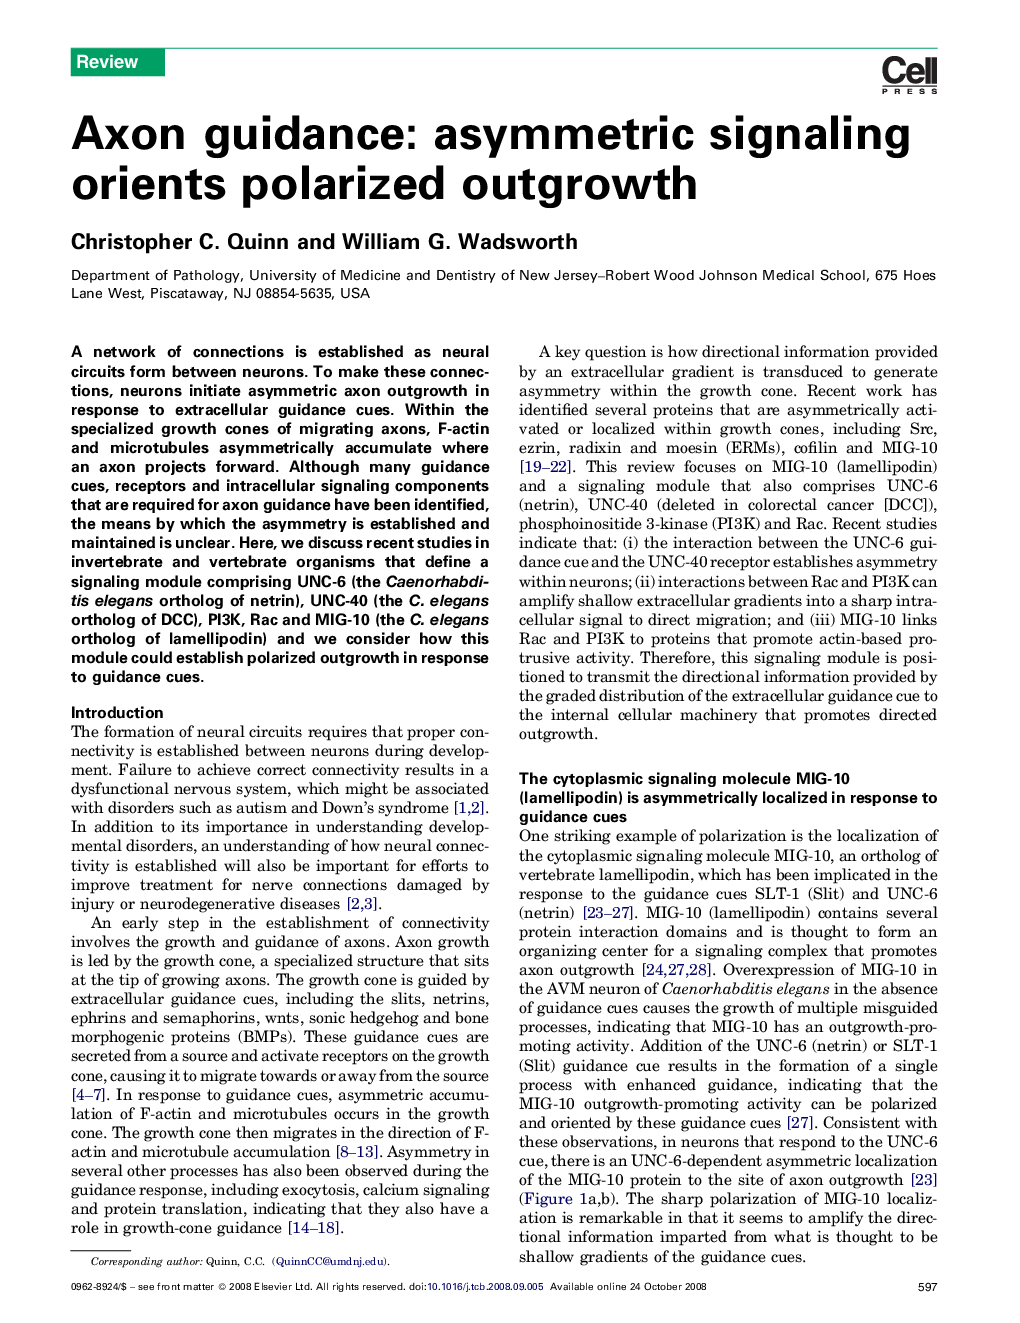 Axon guidance: asymmetric signaling orients polarized outgrowth